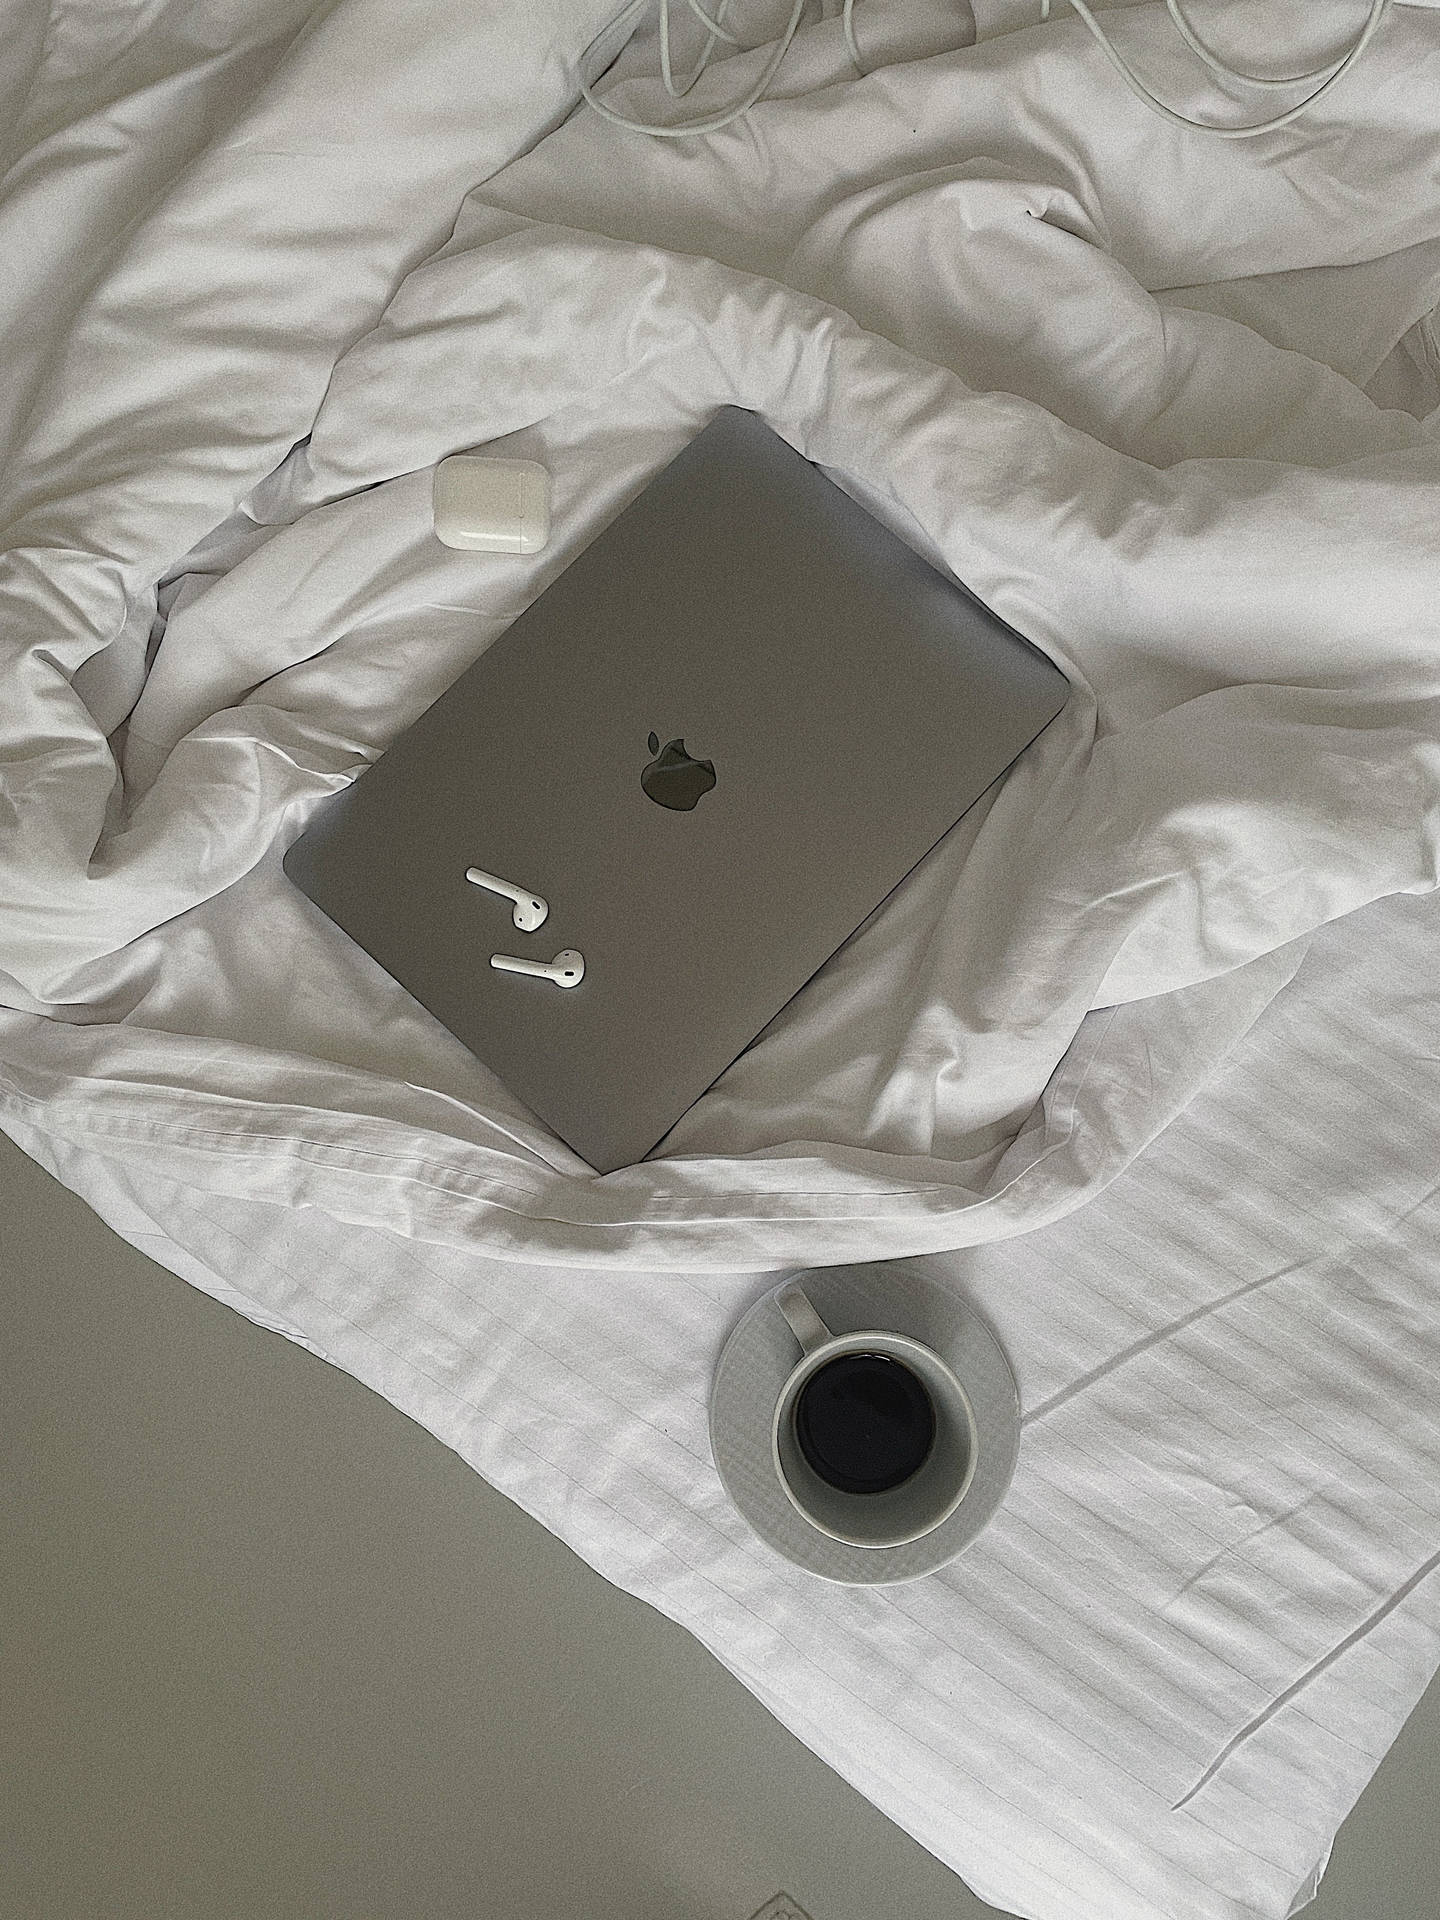 Aesthetic Tumblr Laptop Macbook Coffee